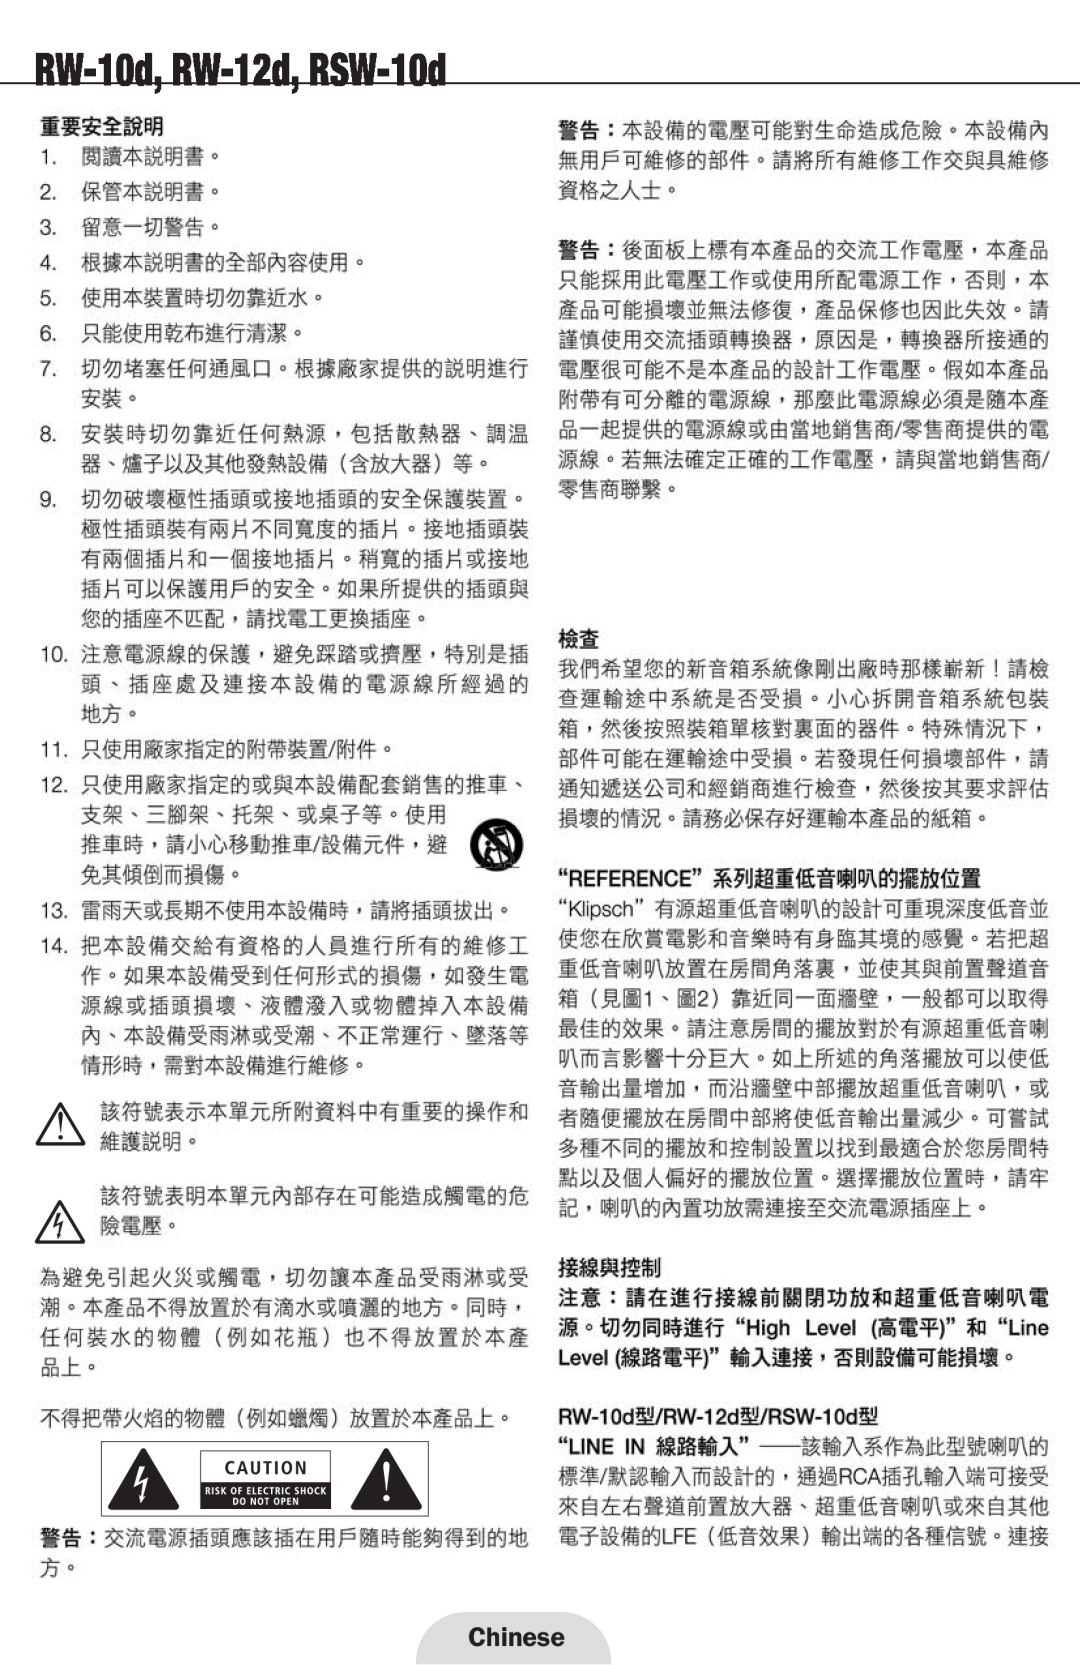 Klipsch manual Chinese, RW-10d, RW-12d, RSW-10d 